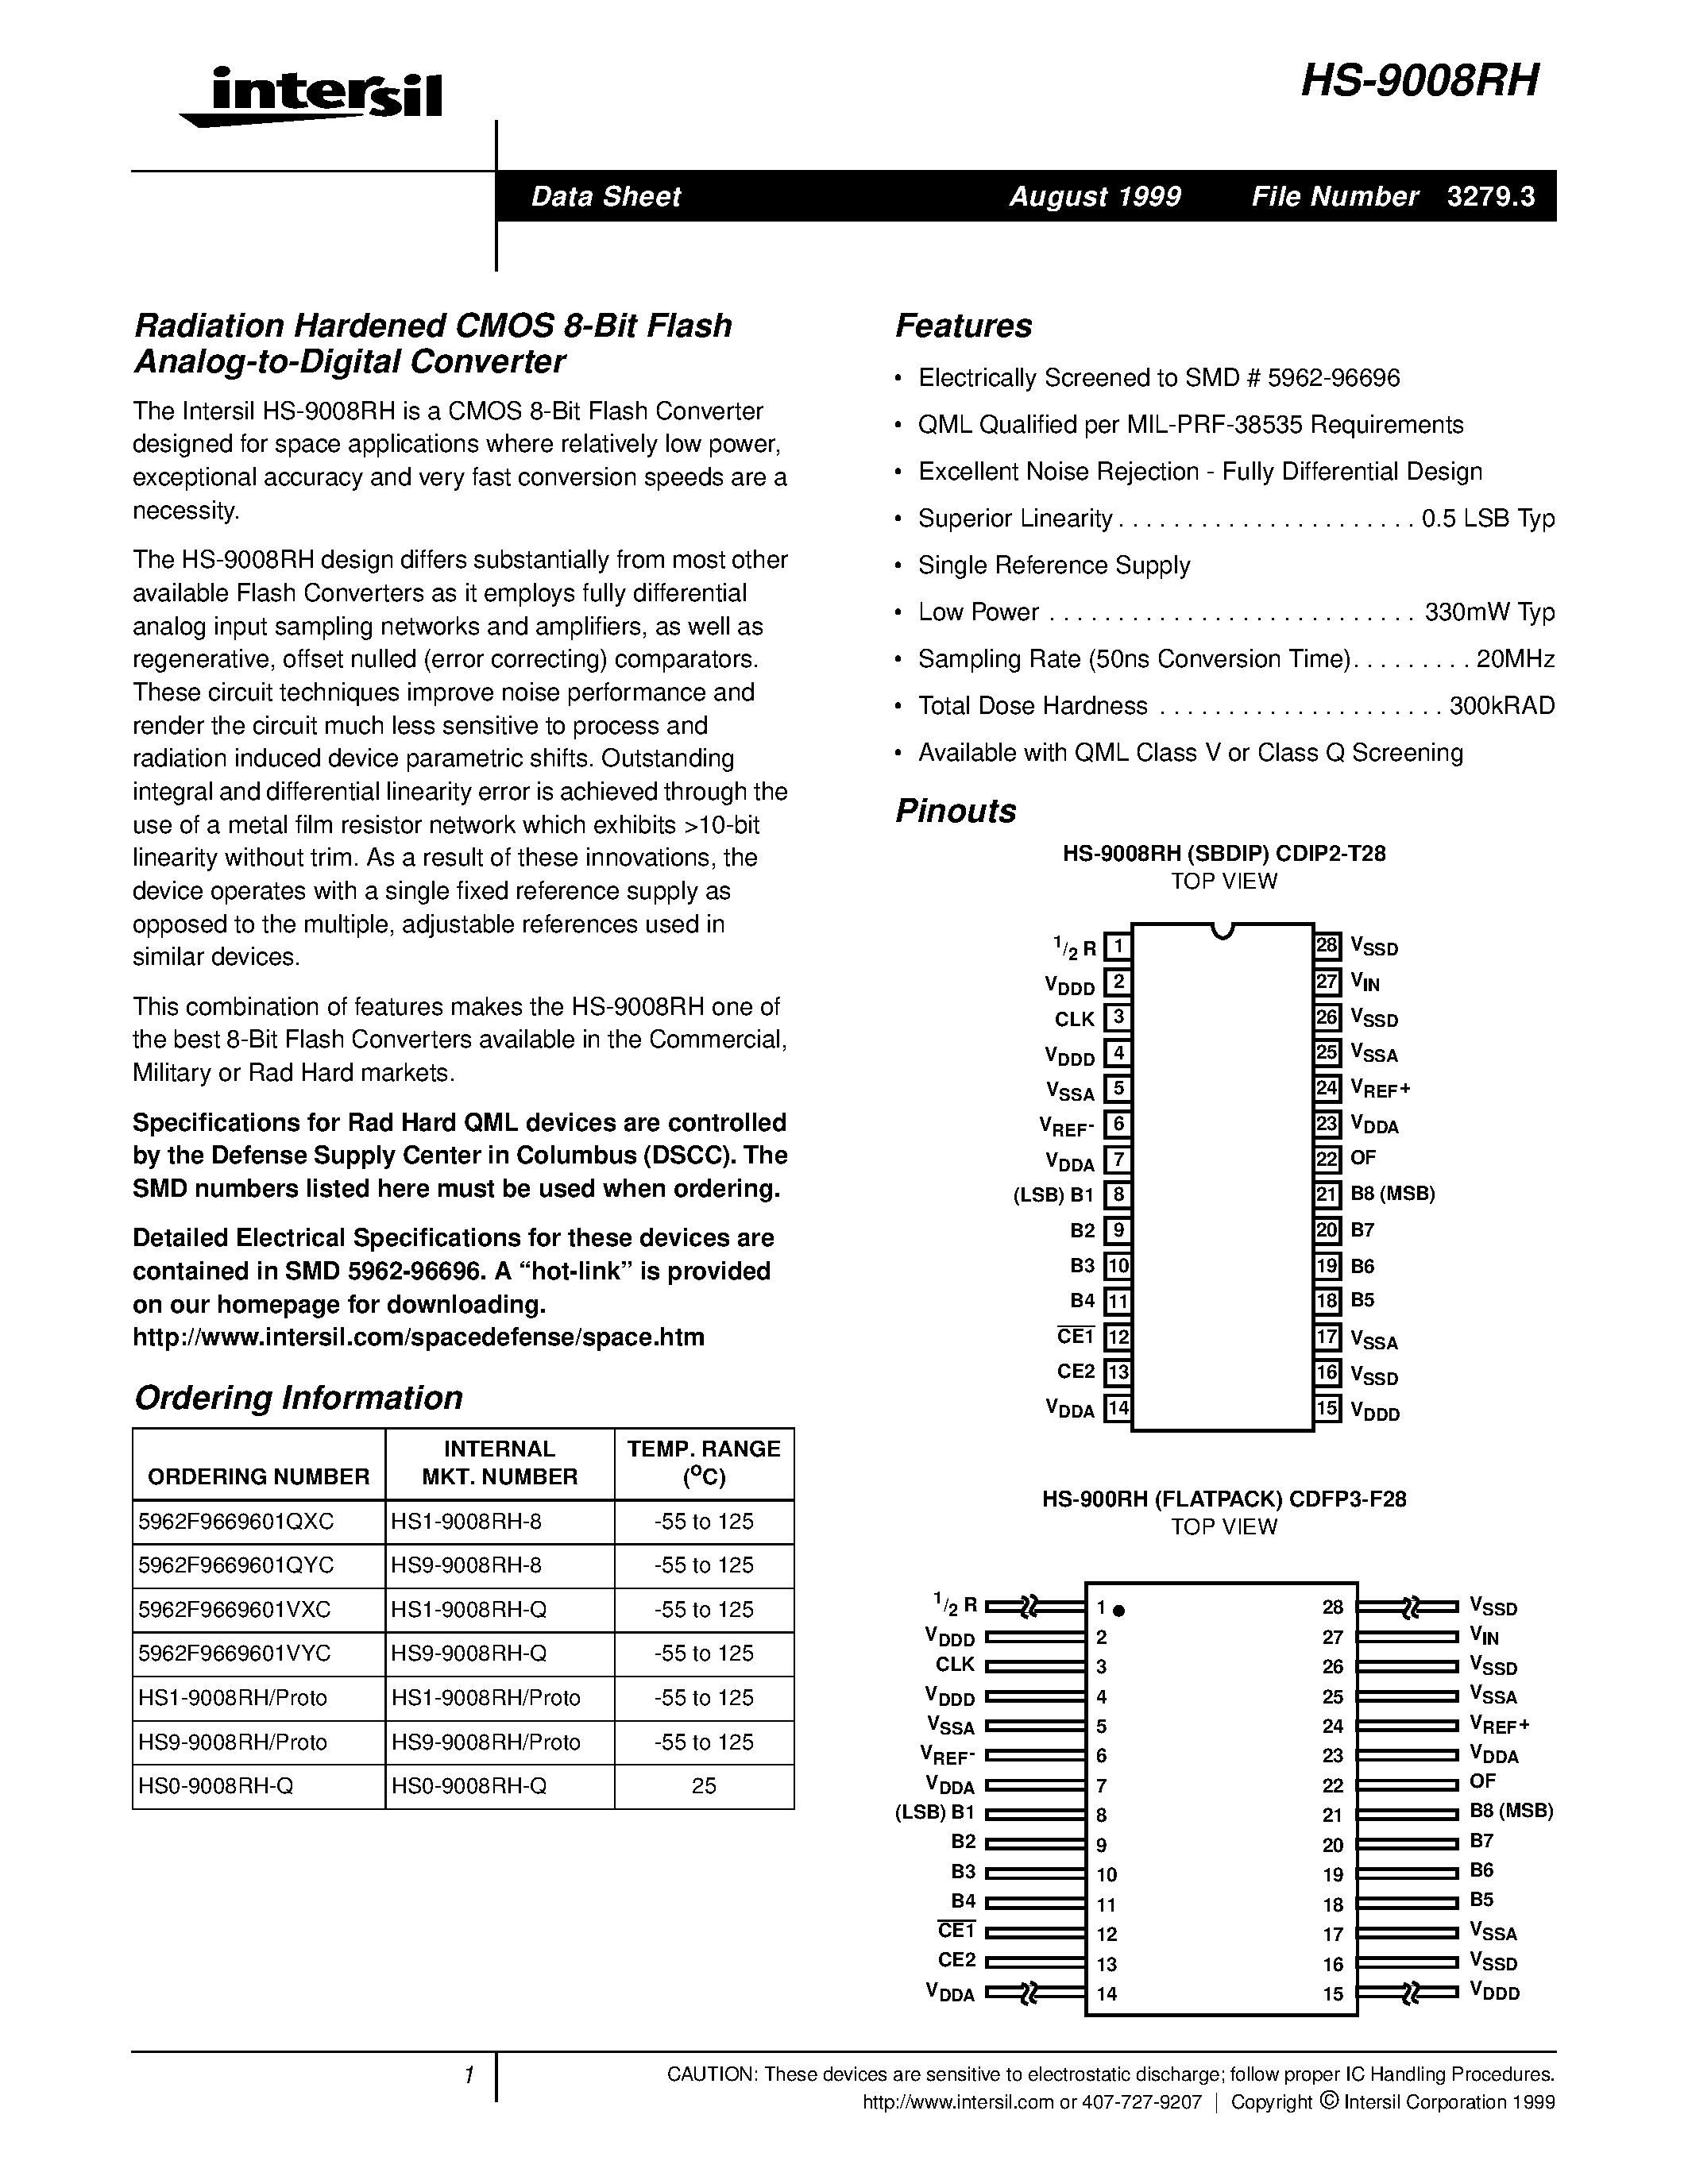 Даташит HS1-9008RH-Q - Radiation Hardened CMOS 8-Bit Flash Analog-to-Digital Converter страница 1